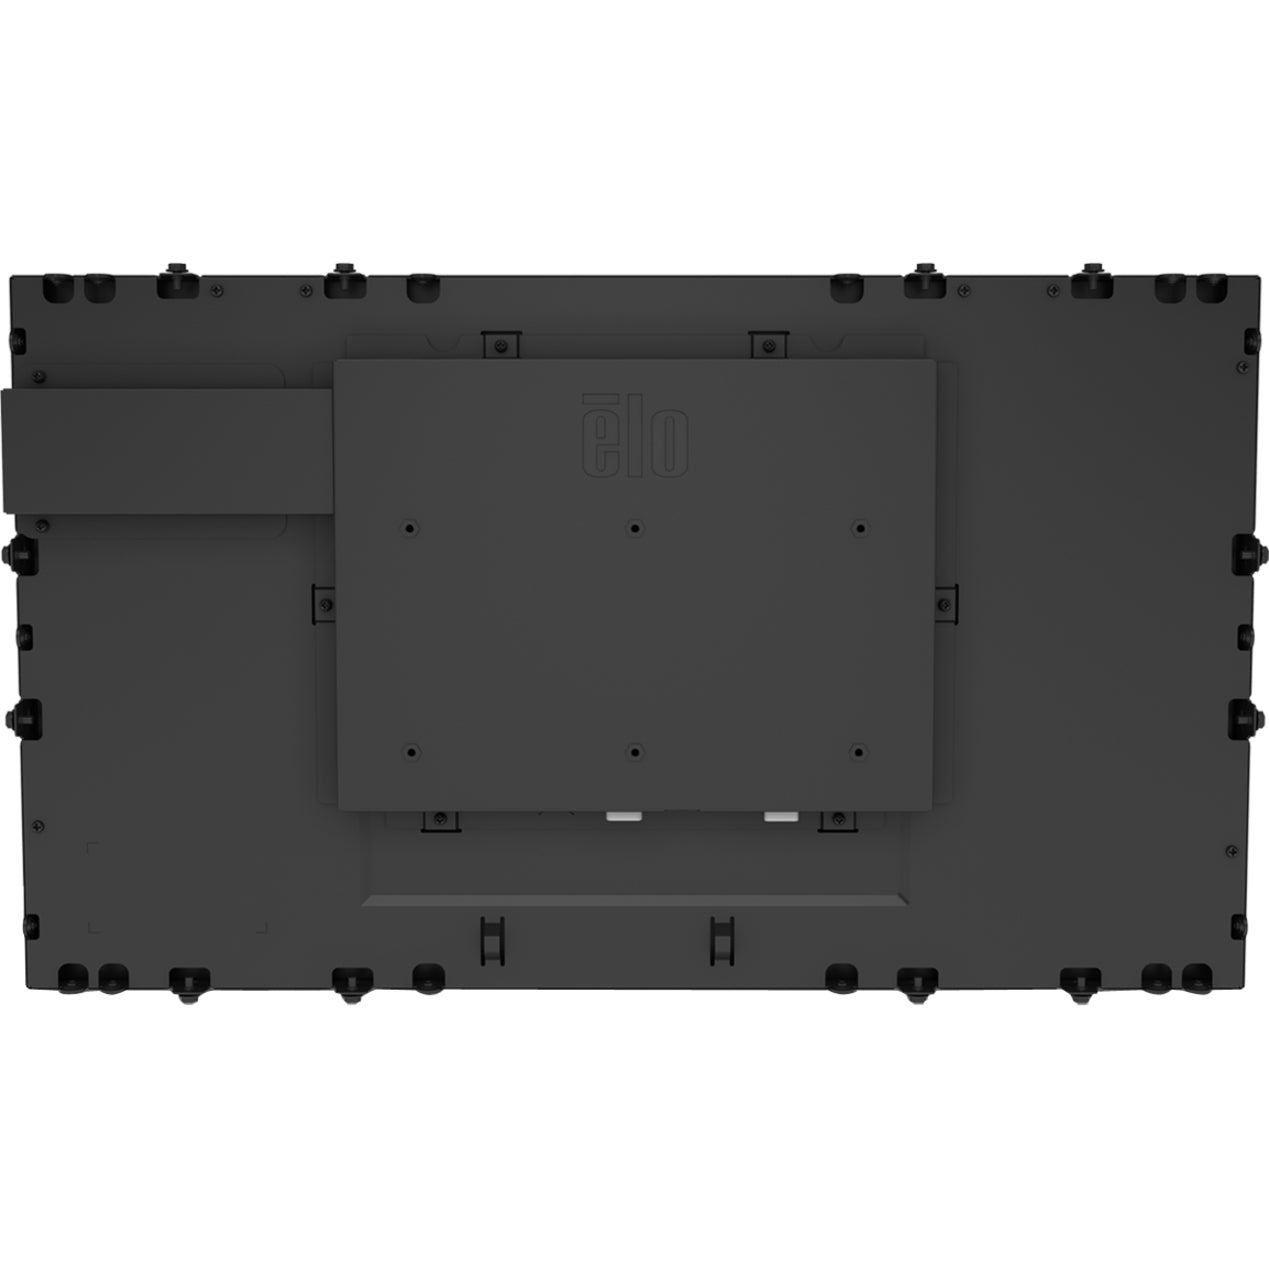 Elo E327914 2294L 21.5" Open Frame Touchscreen Monitor, Full HD, HDMI VGA DisplayPort, 3 Year Warranty